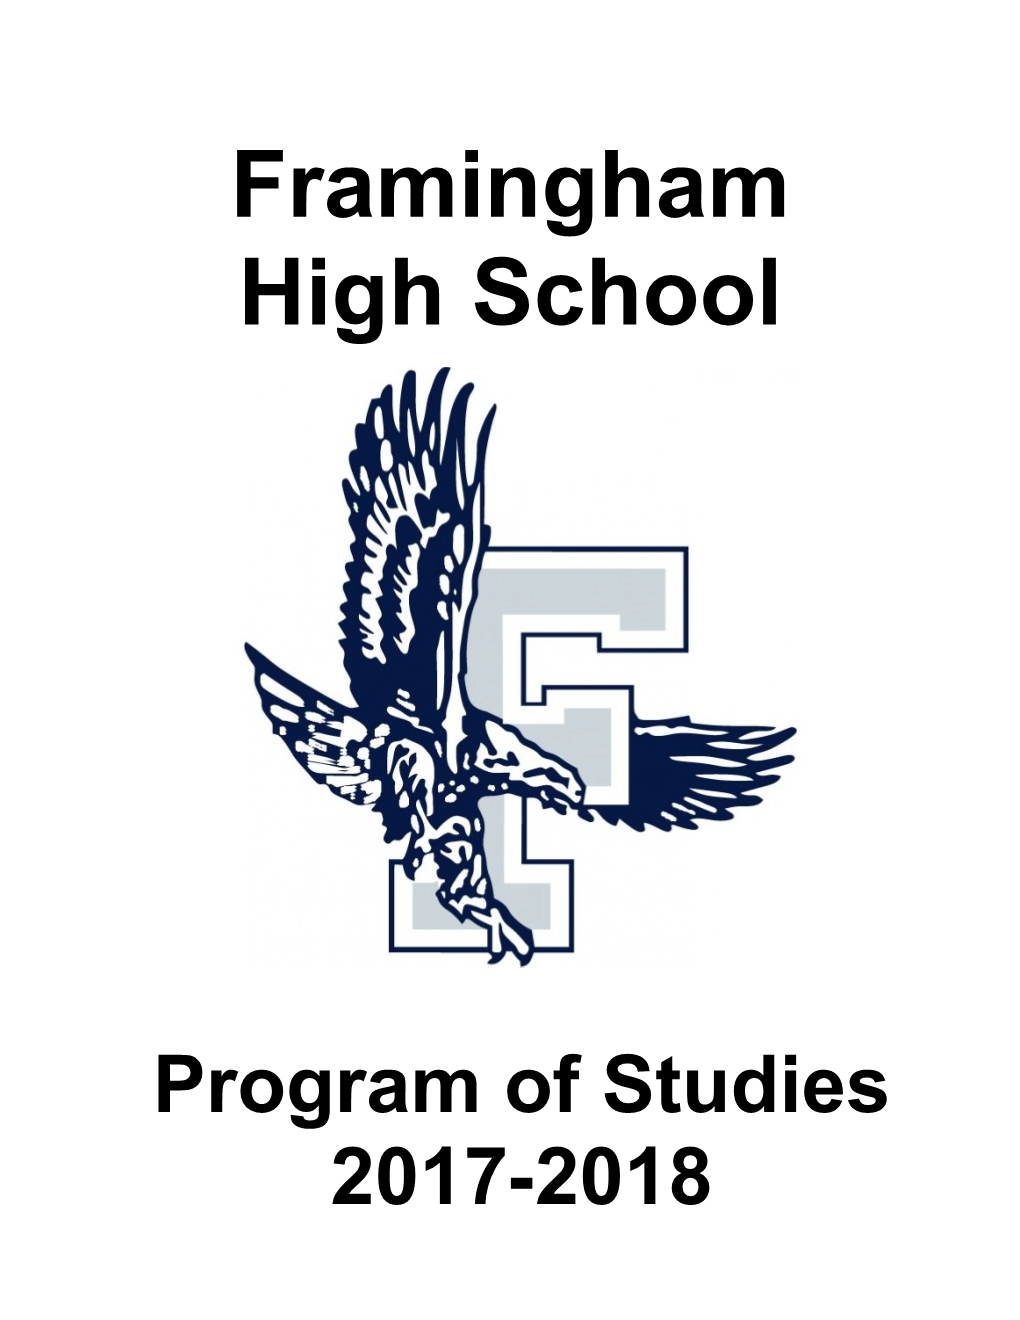 Framingham High School